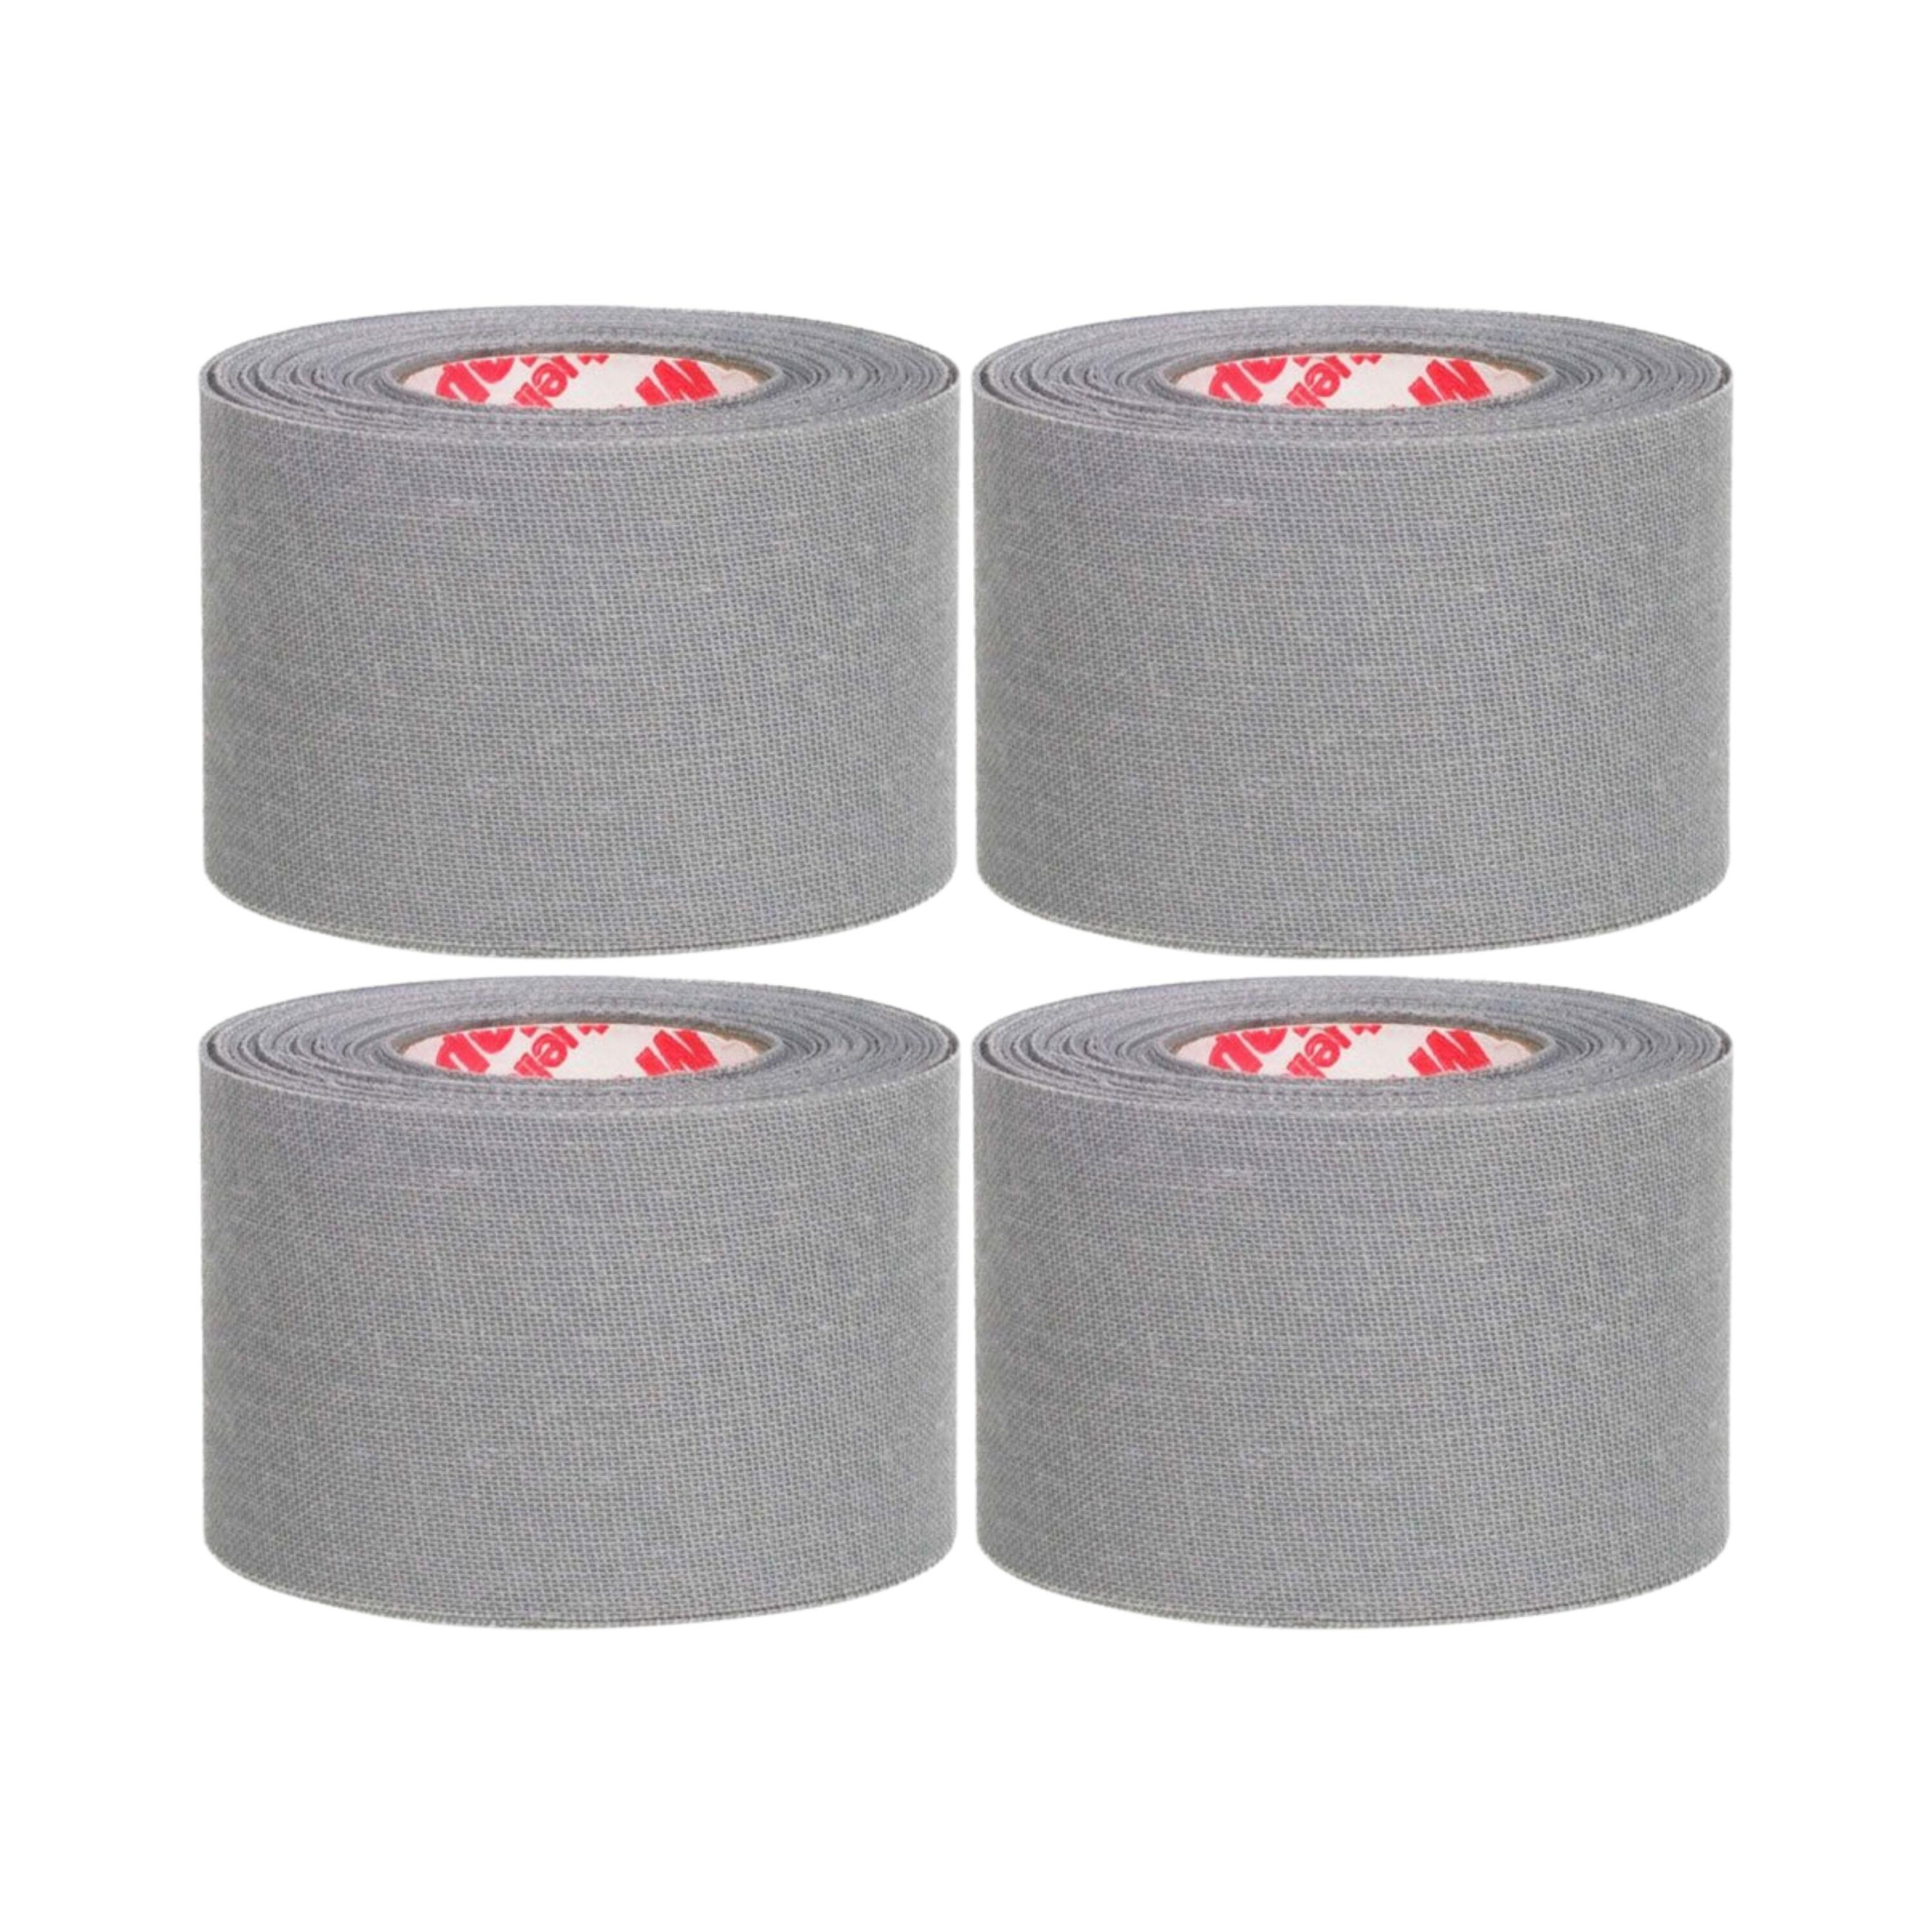 MUELLER Mueller M Tape Zinc Oxide 3.8cm X 9.14m (Pack of 4) - Grey